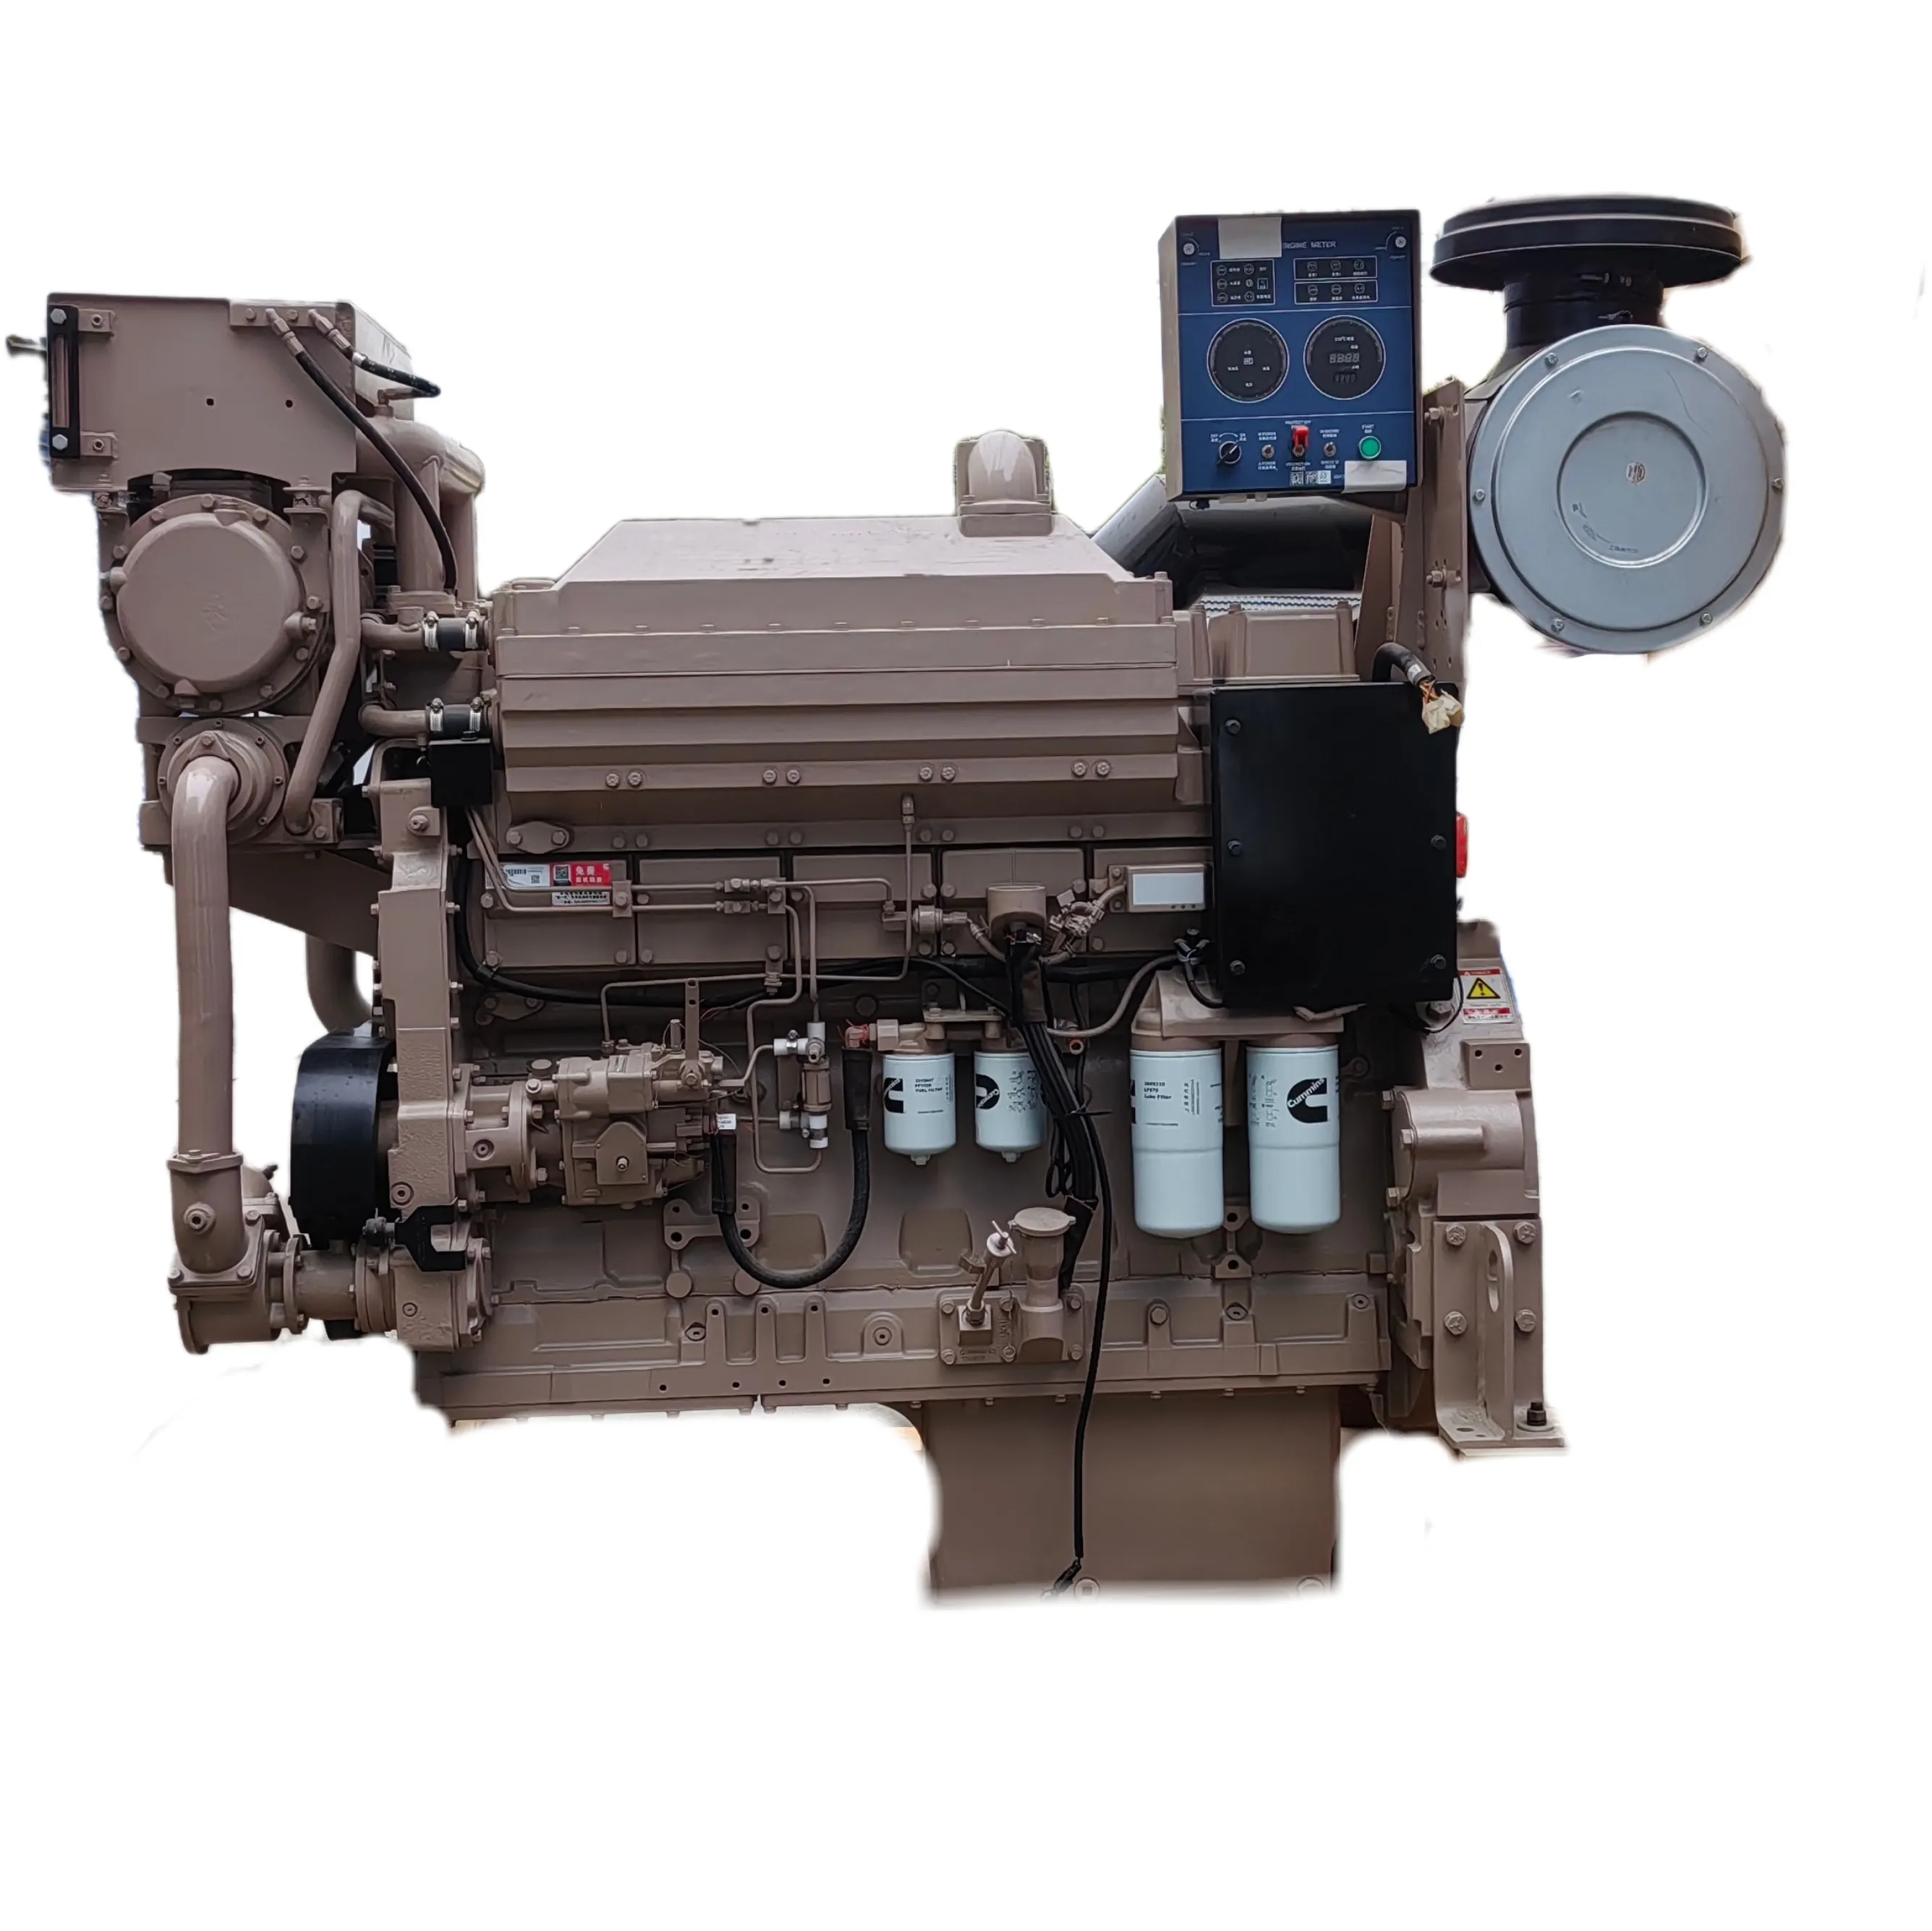 Scdc Beste Prijs 4 Slagen 6 Cilinders Marine Hoofdmotoren K19-M Dieselmotor